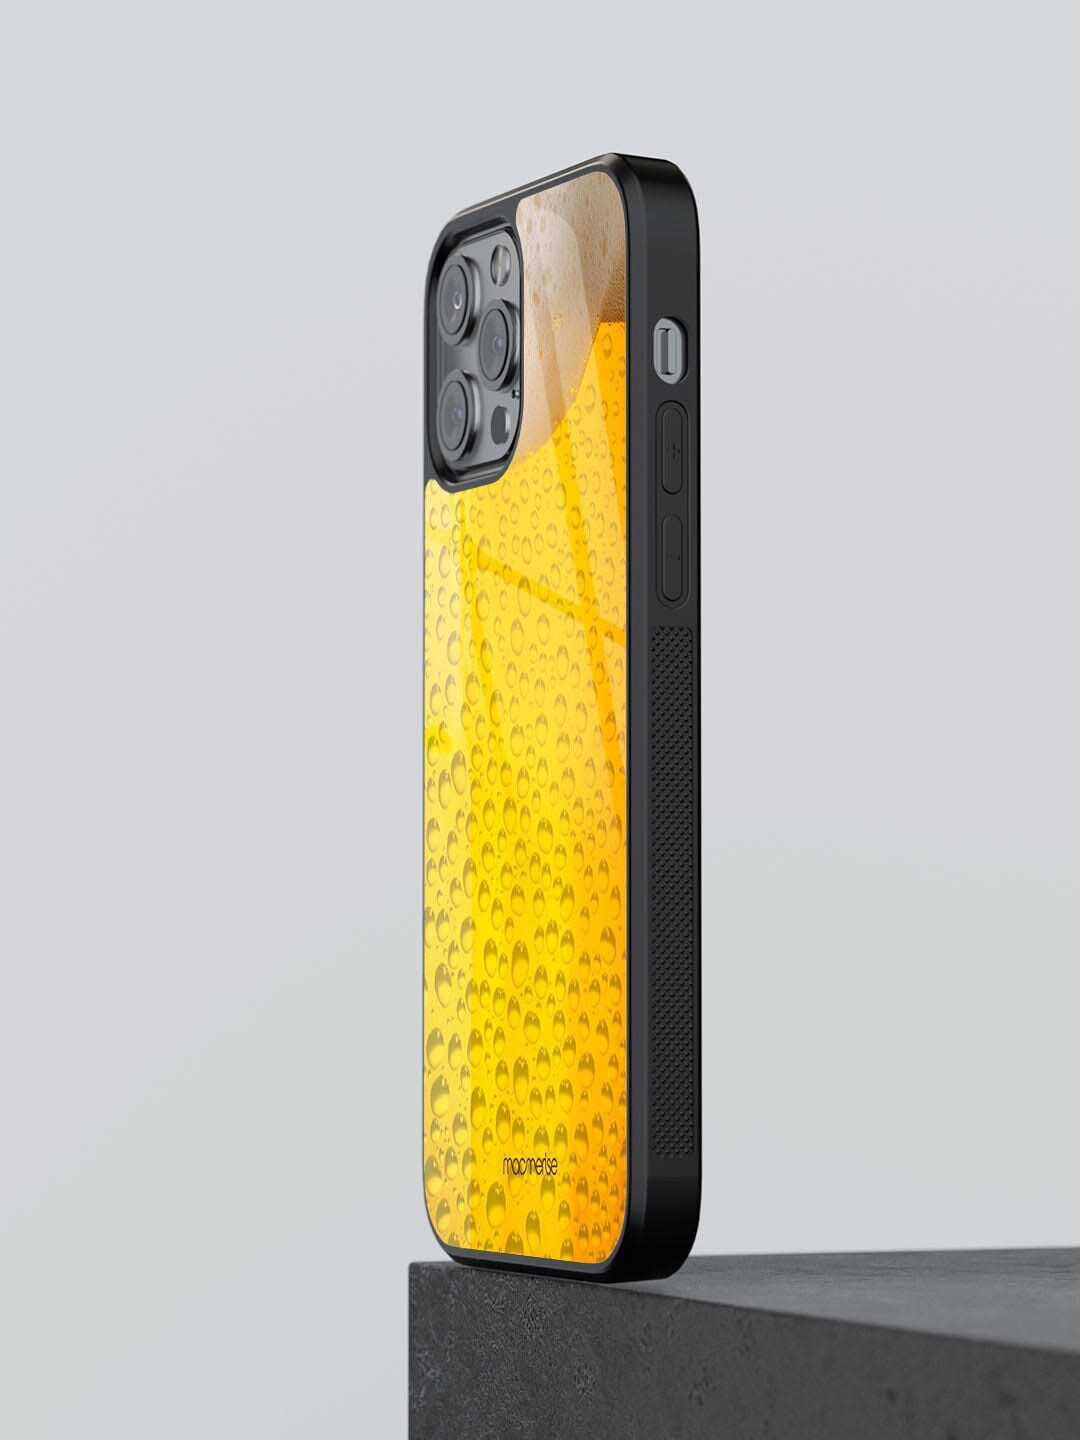 macmerise Yellow Chug It iPhone 12 Pro Max Mobile Phone Case Price in India